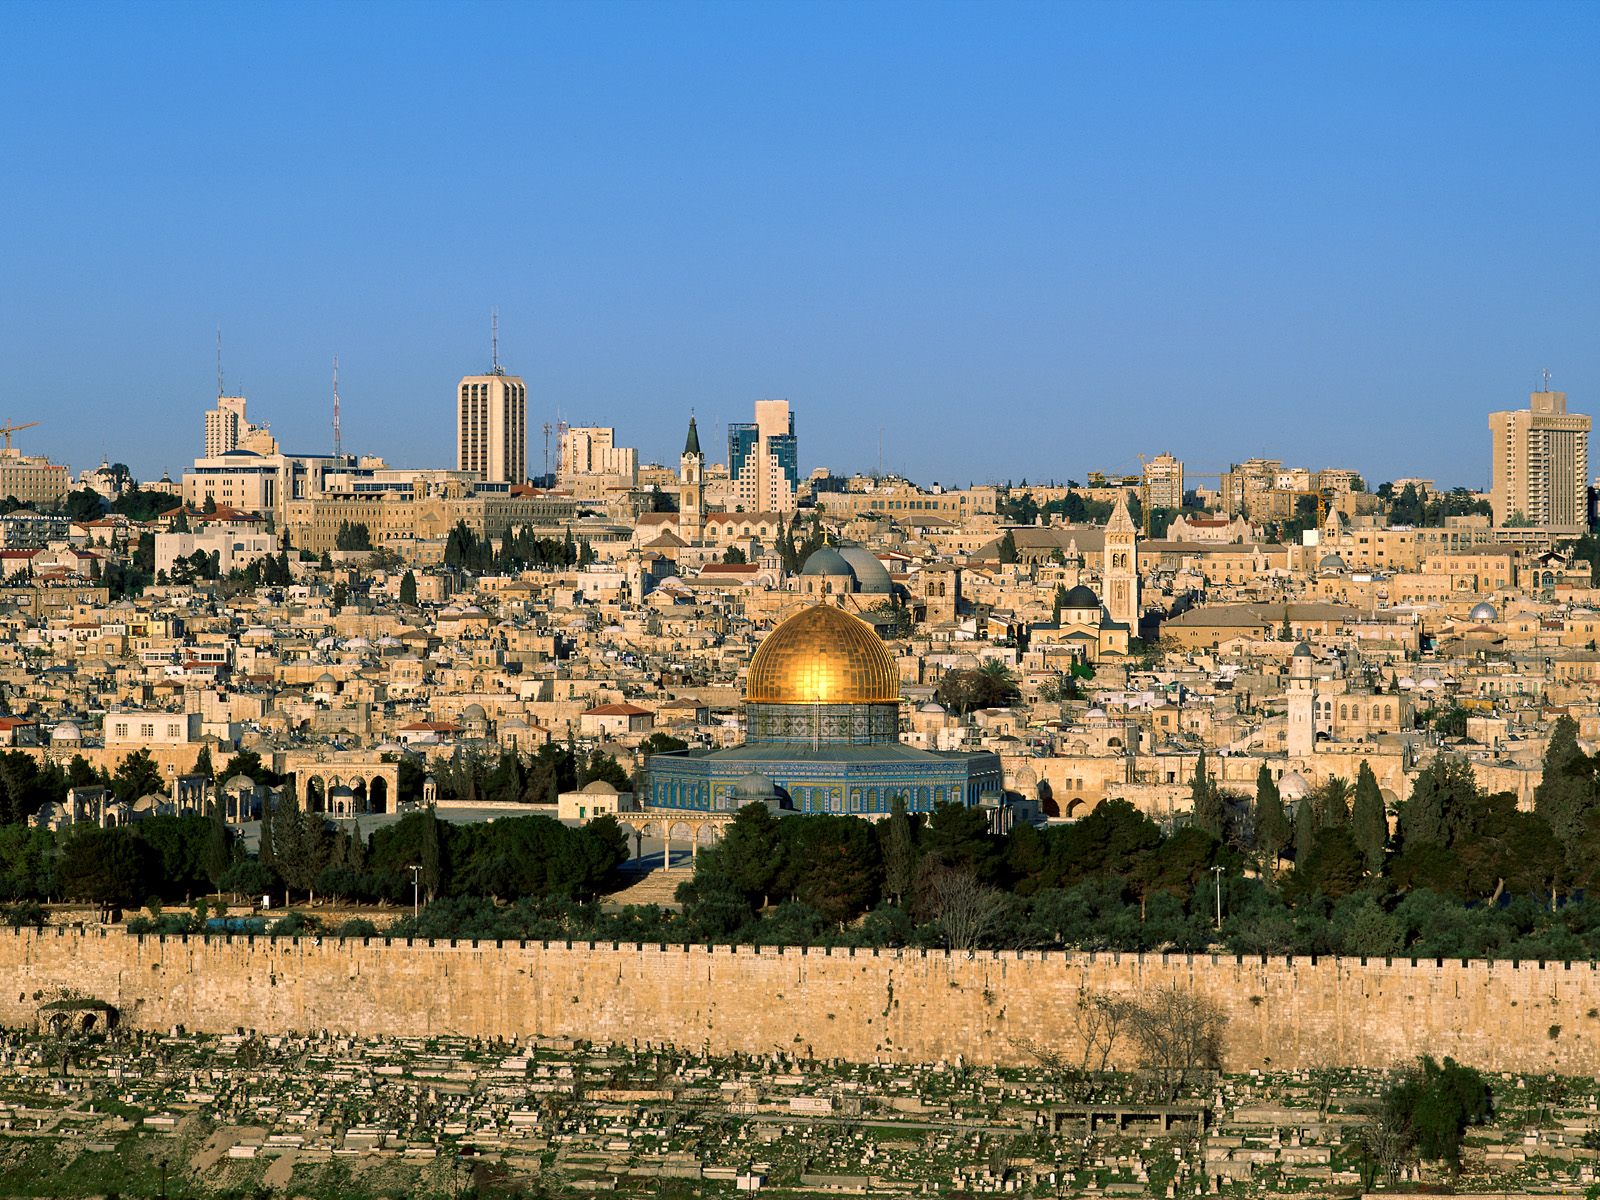 U.S. recognition of Jerusalem causes concern of world community